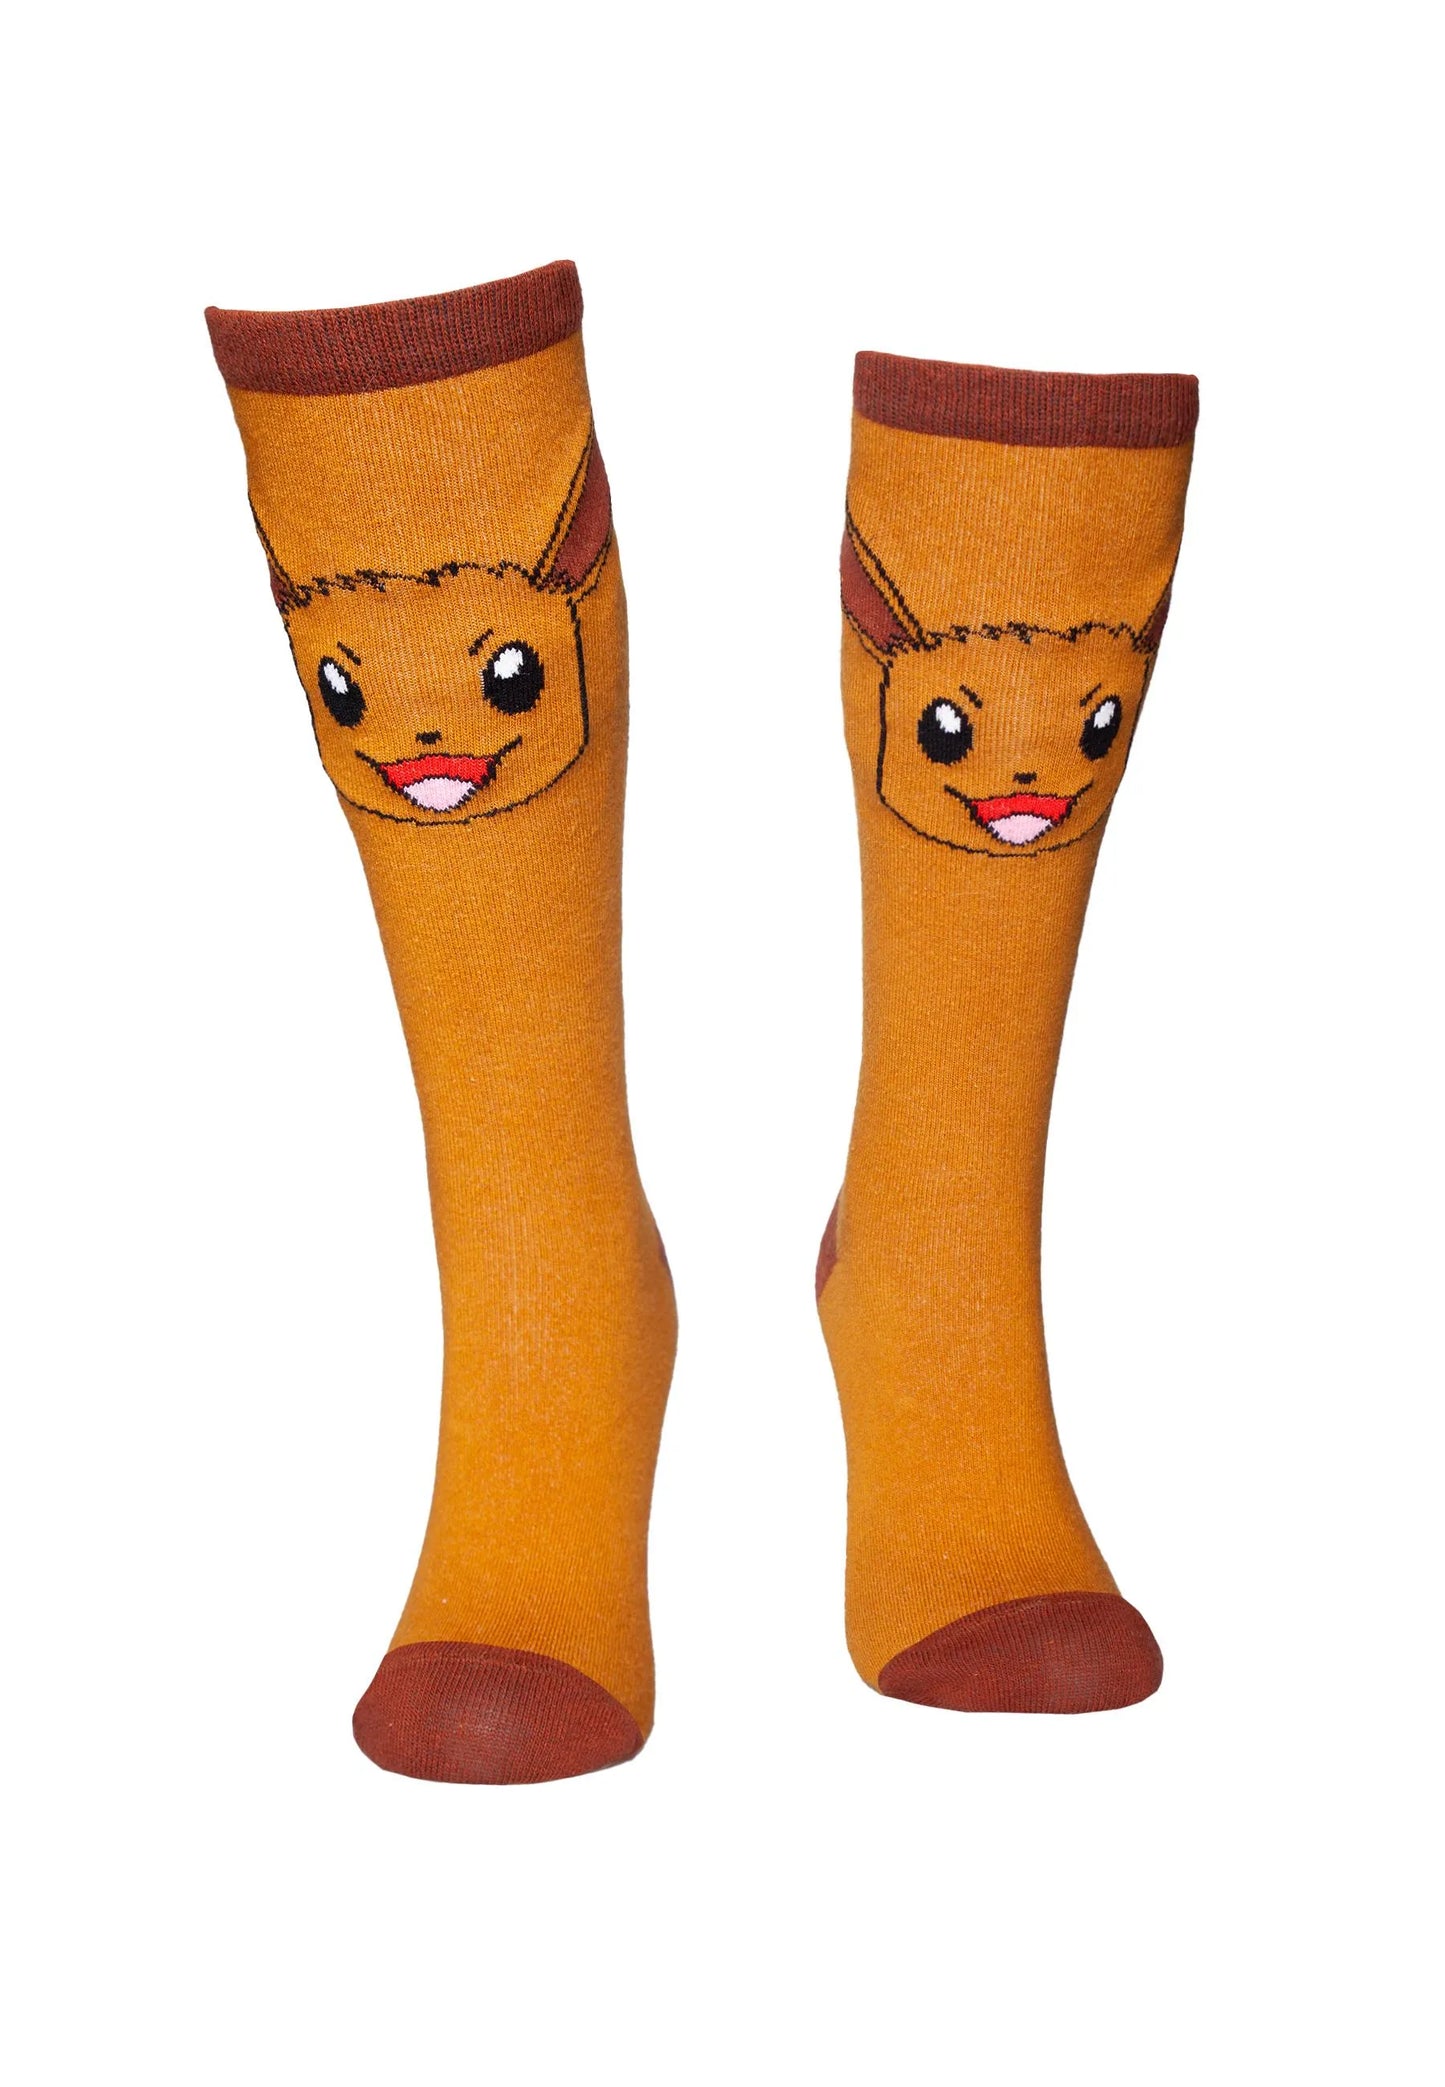 POKEMON - Eevee Knee High Socks